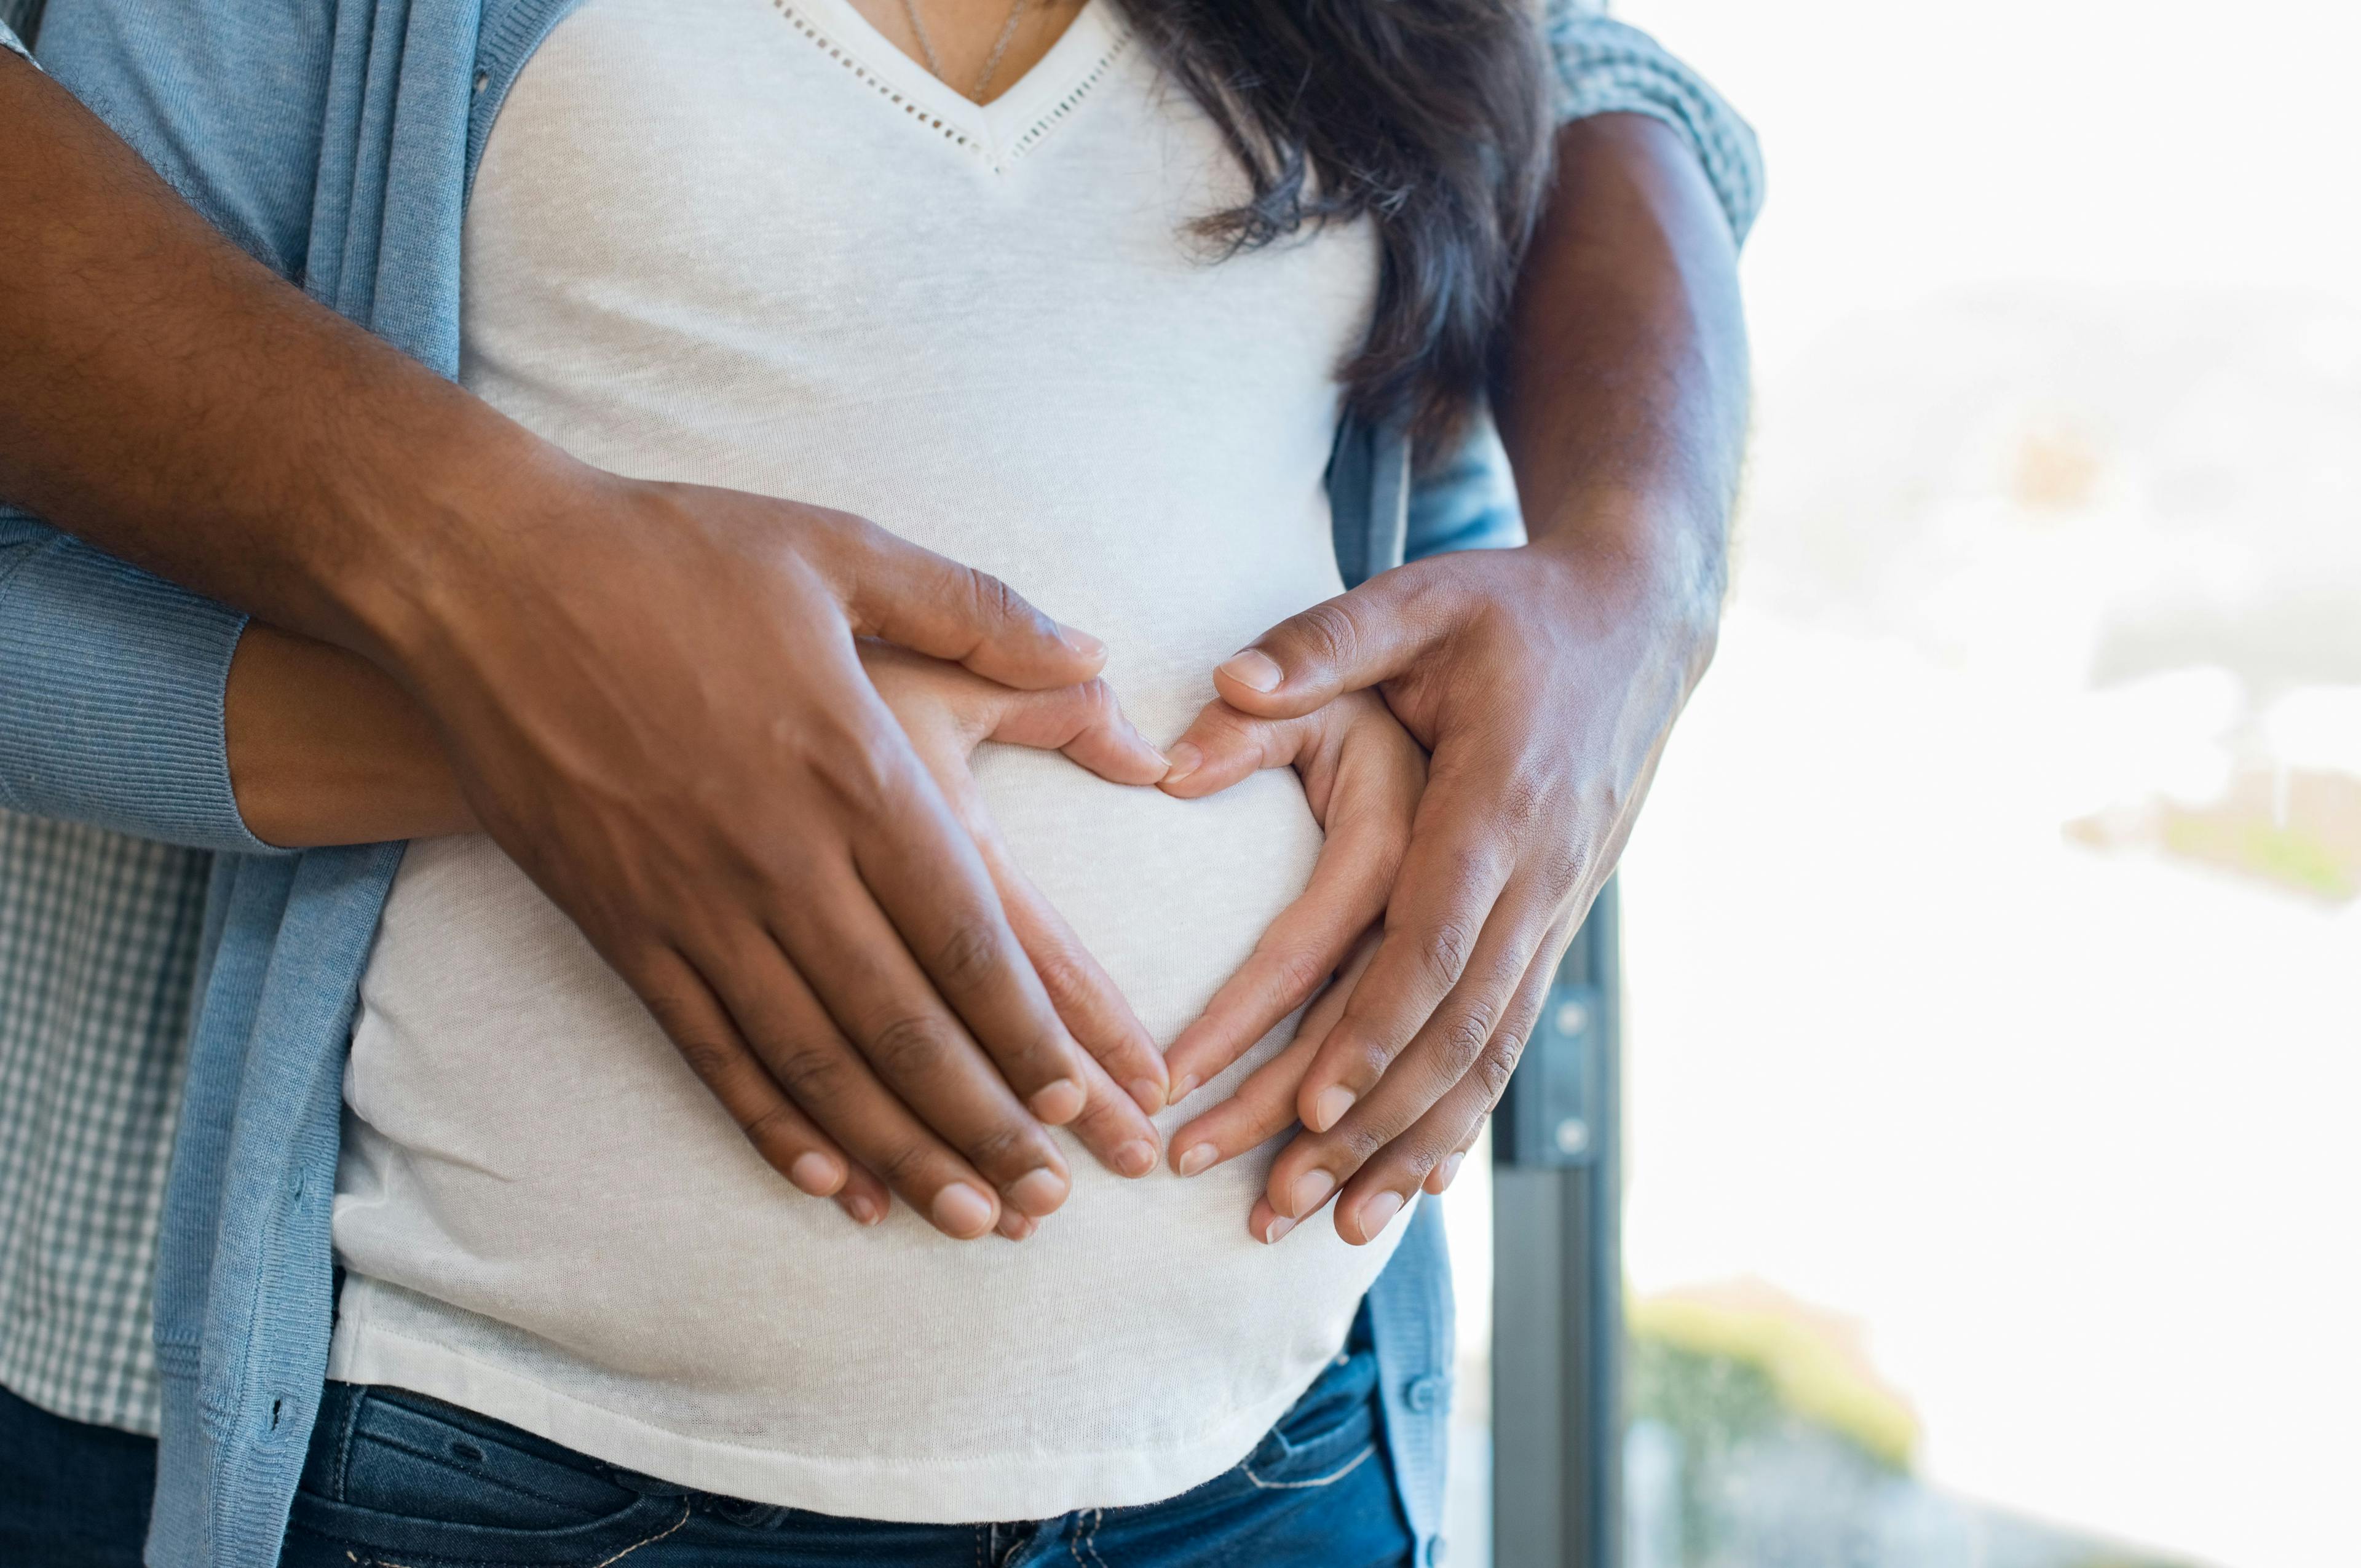 Interpregnancy interval linked to spontaneous abortion risk | Image Credit: © Rido - © Rido - stock.adobe.com.